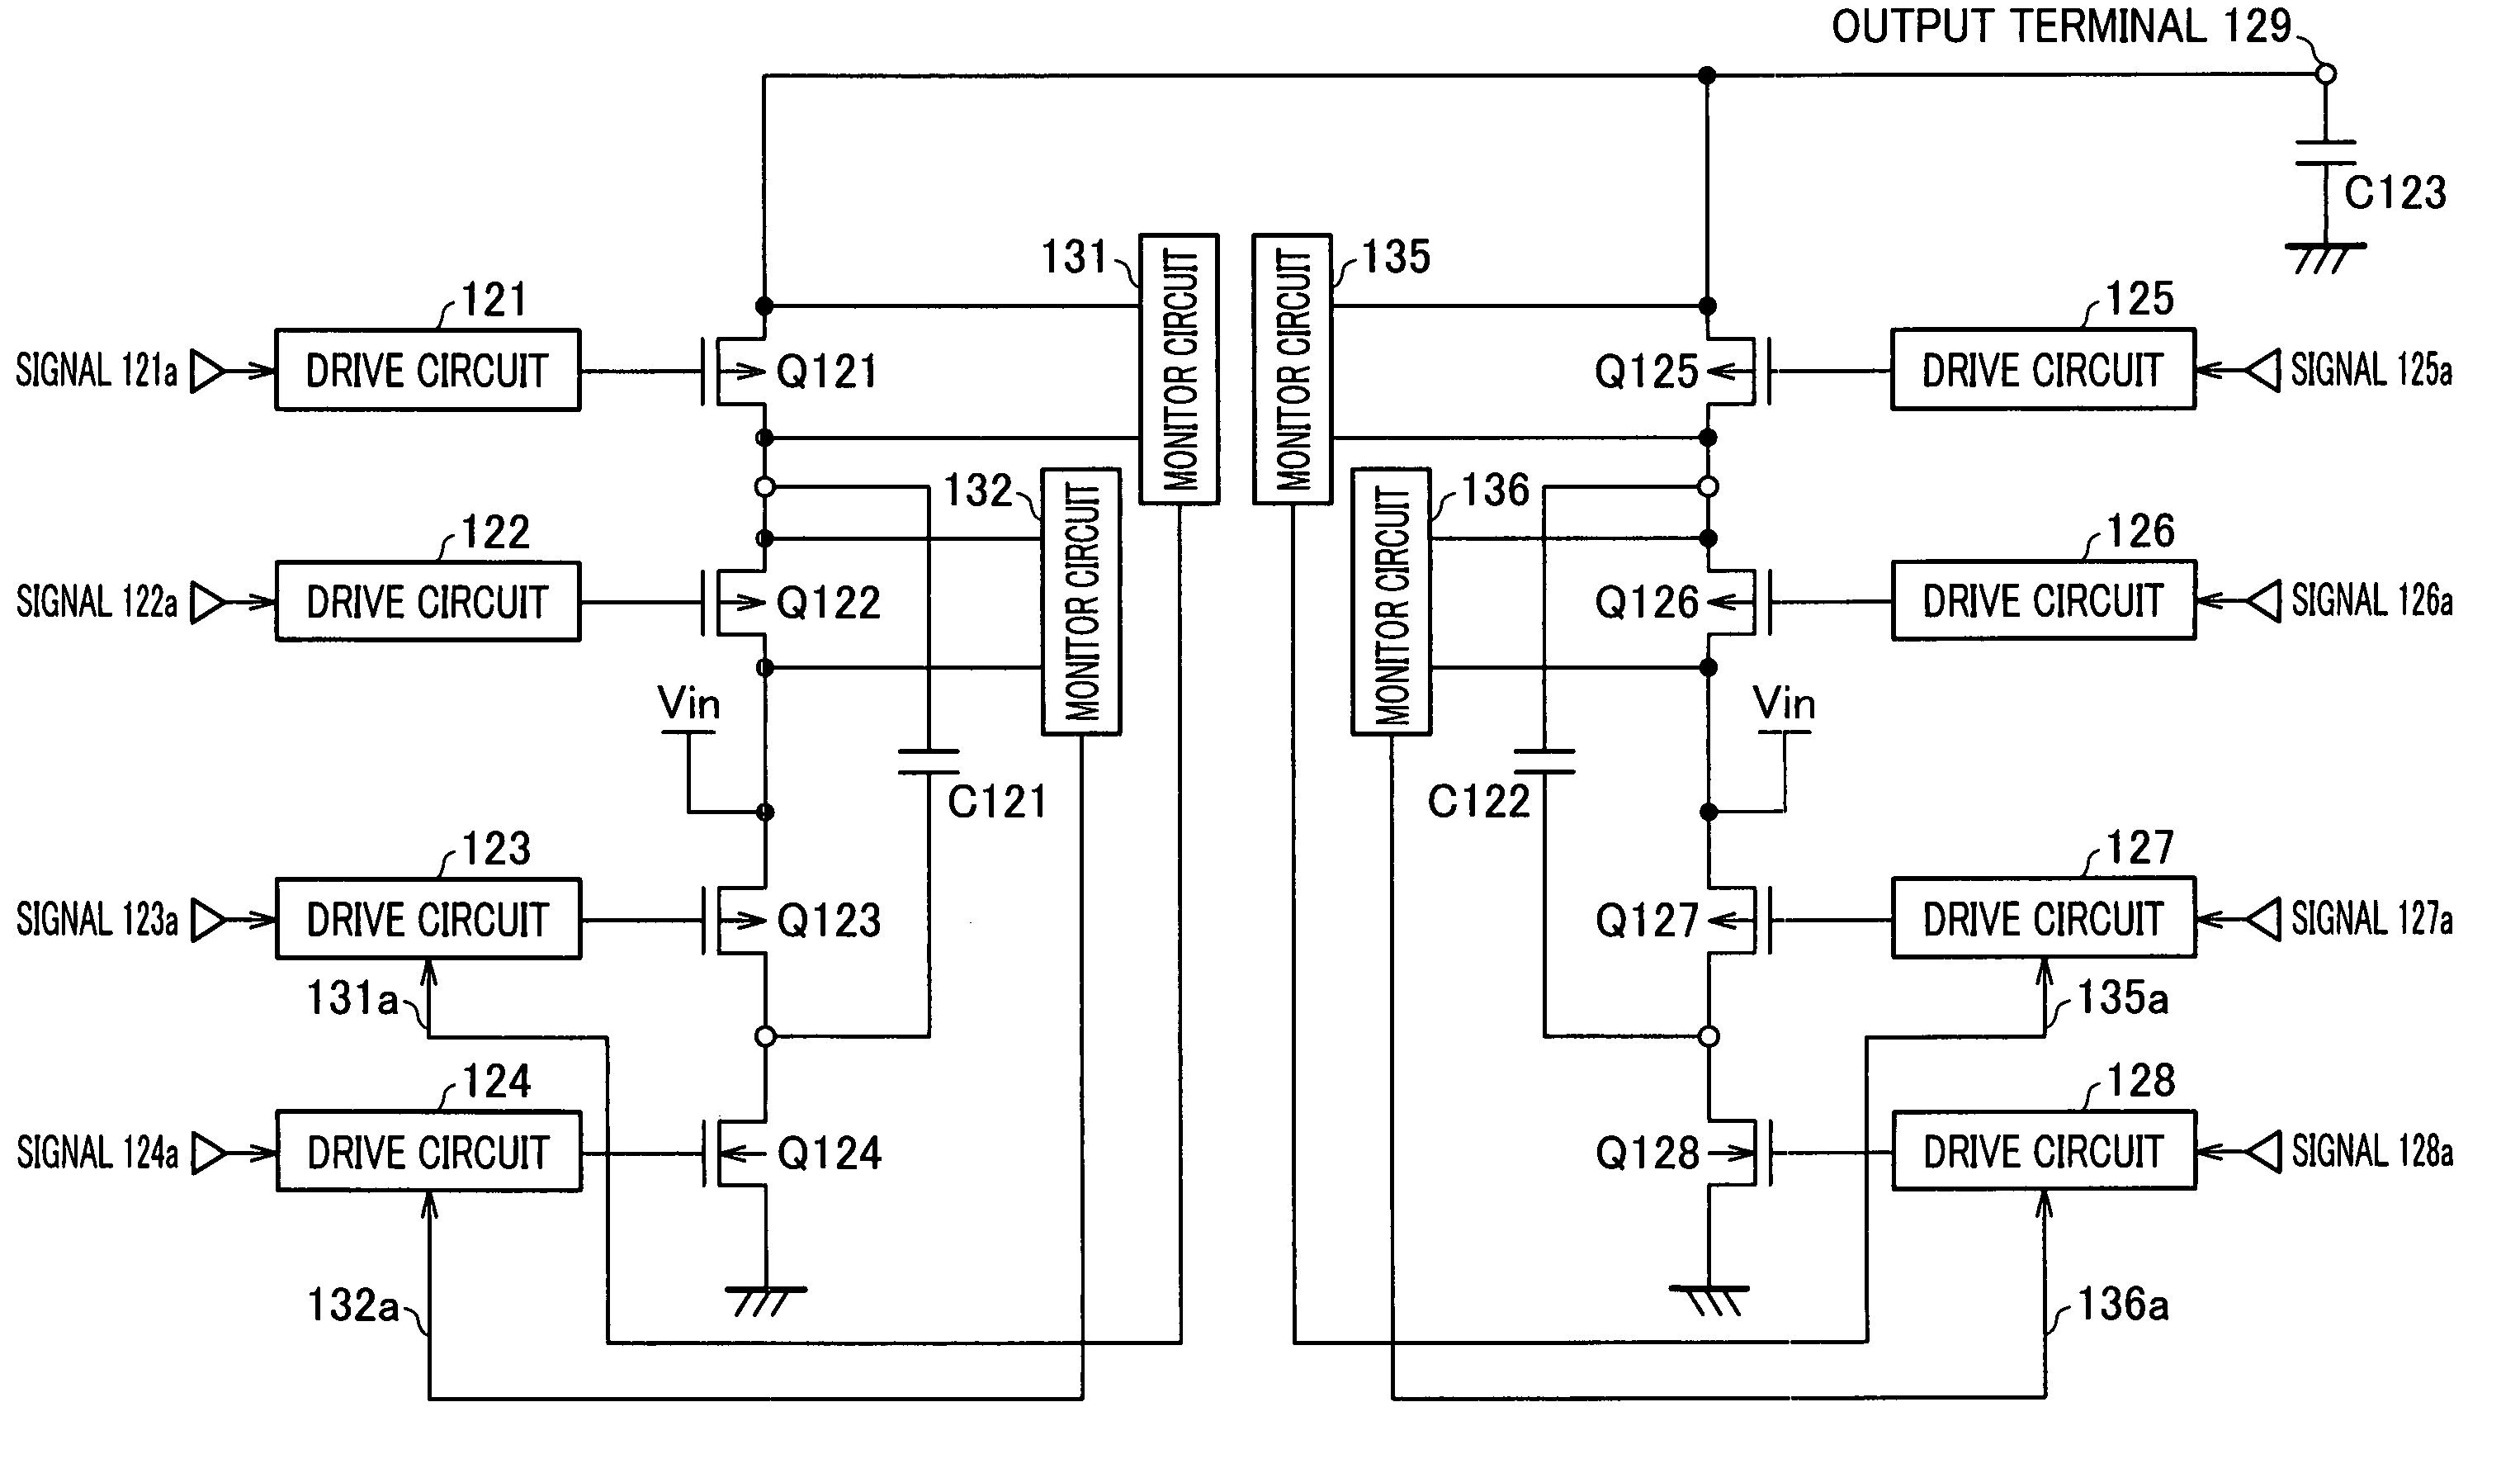 Charge pump DC/DC converter circuit